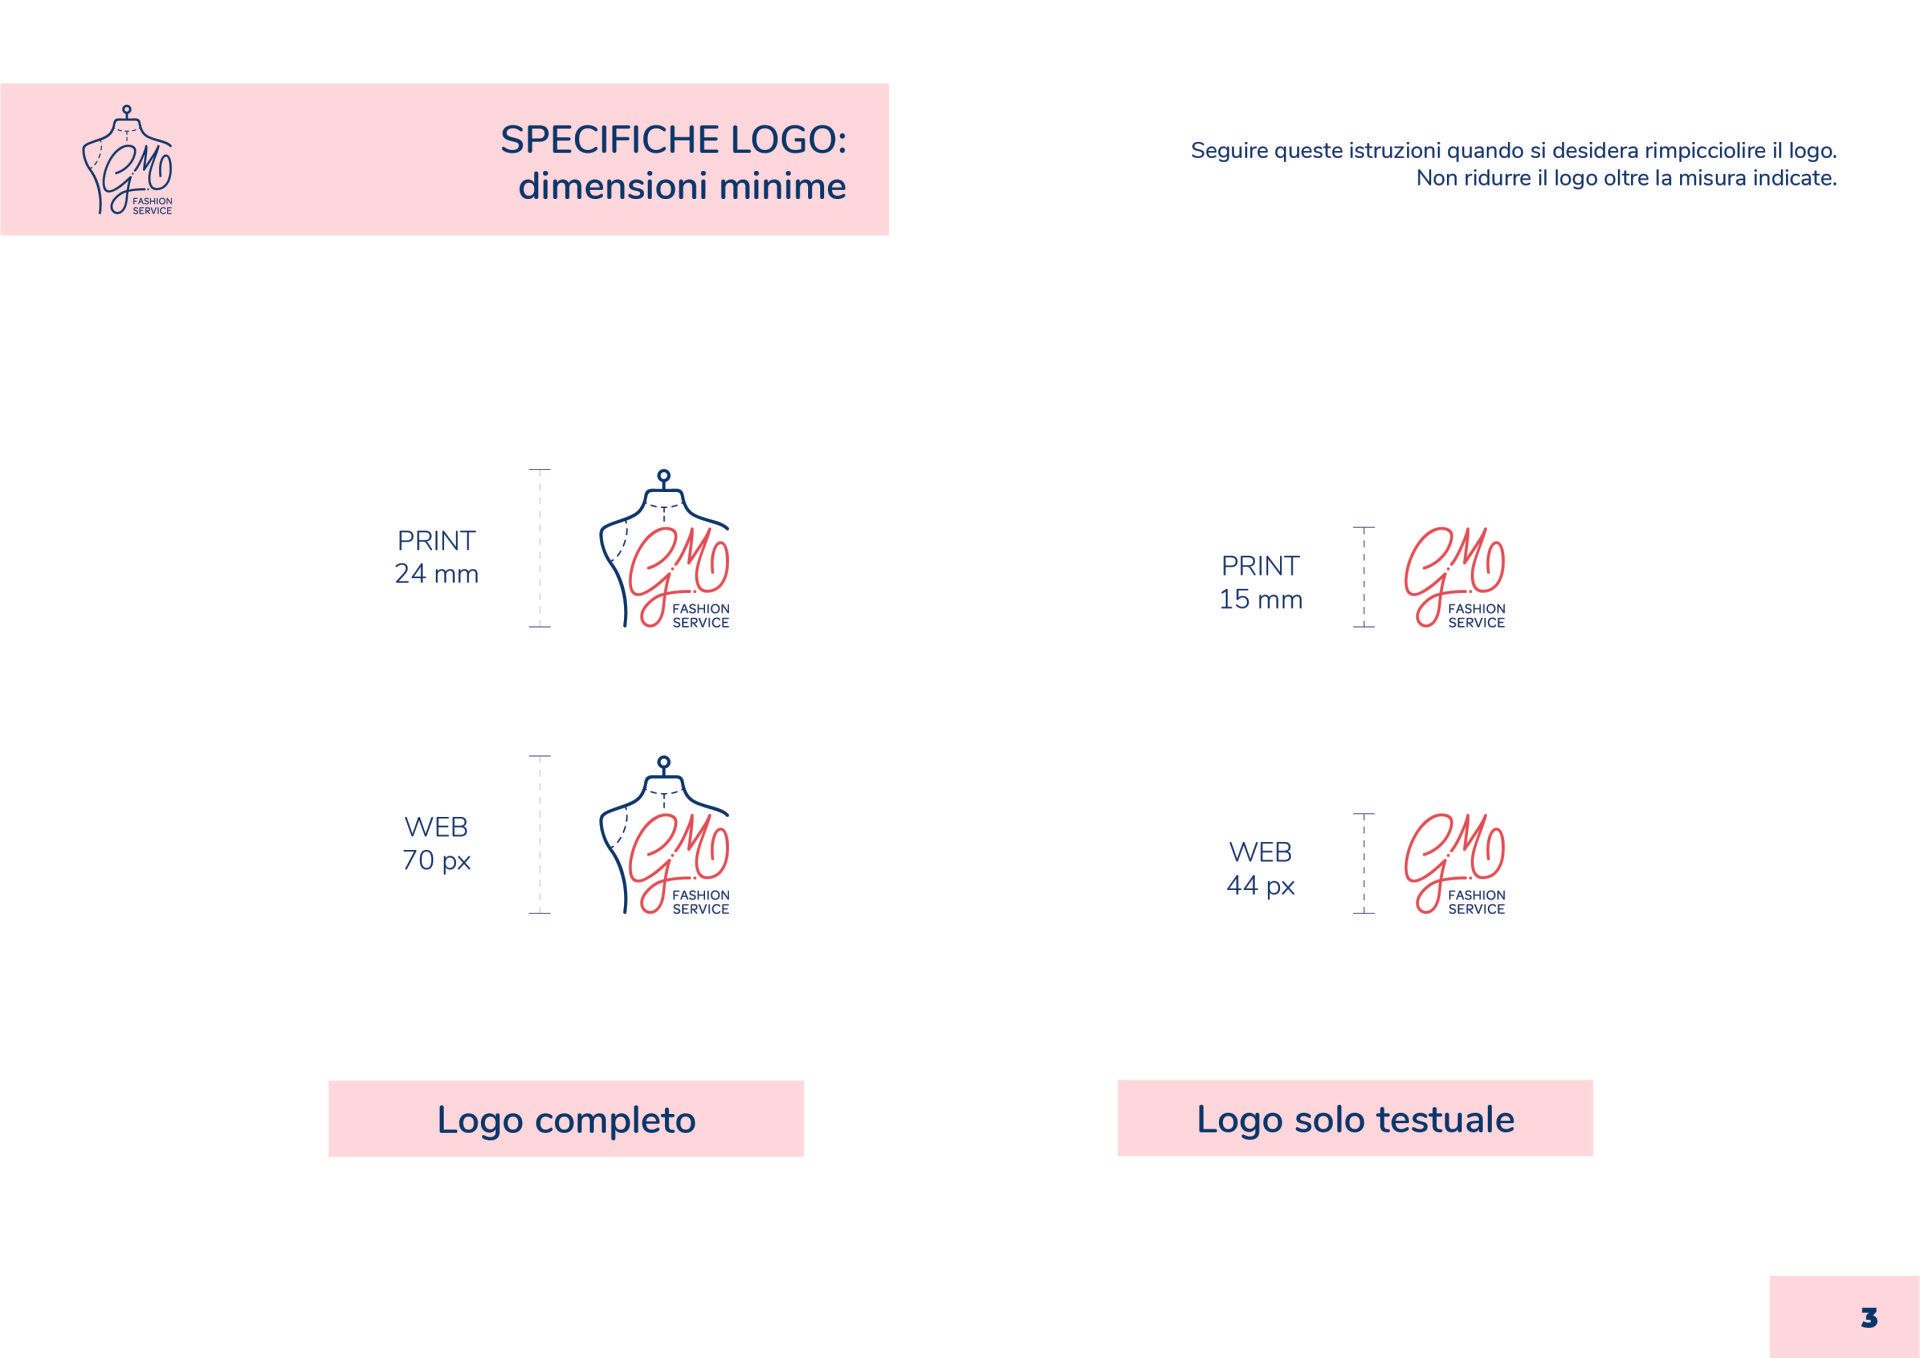 Logo configurations - dimensions